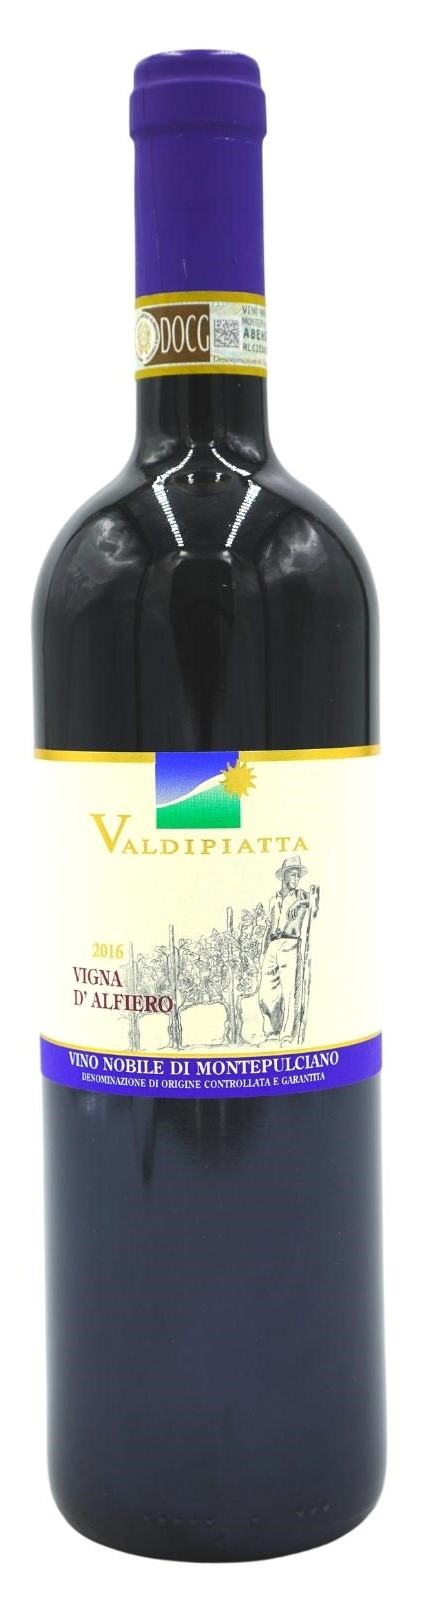 2016 Vino Nobile di Montepulciano Vigna d'Alfiero